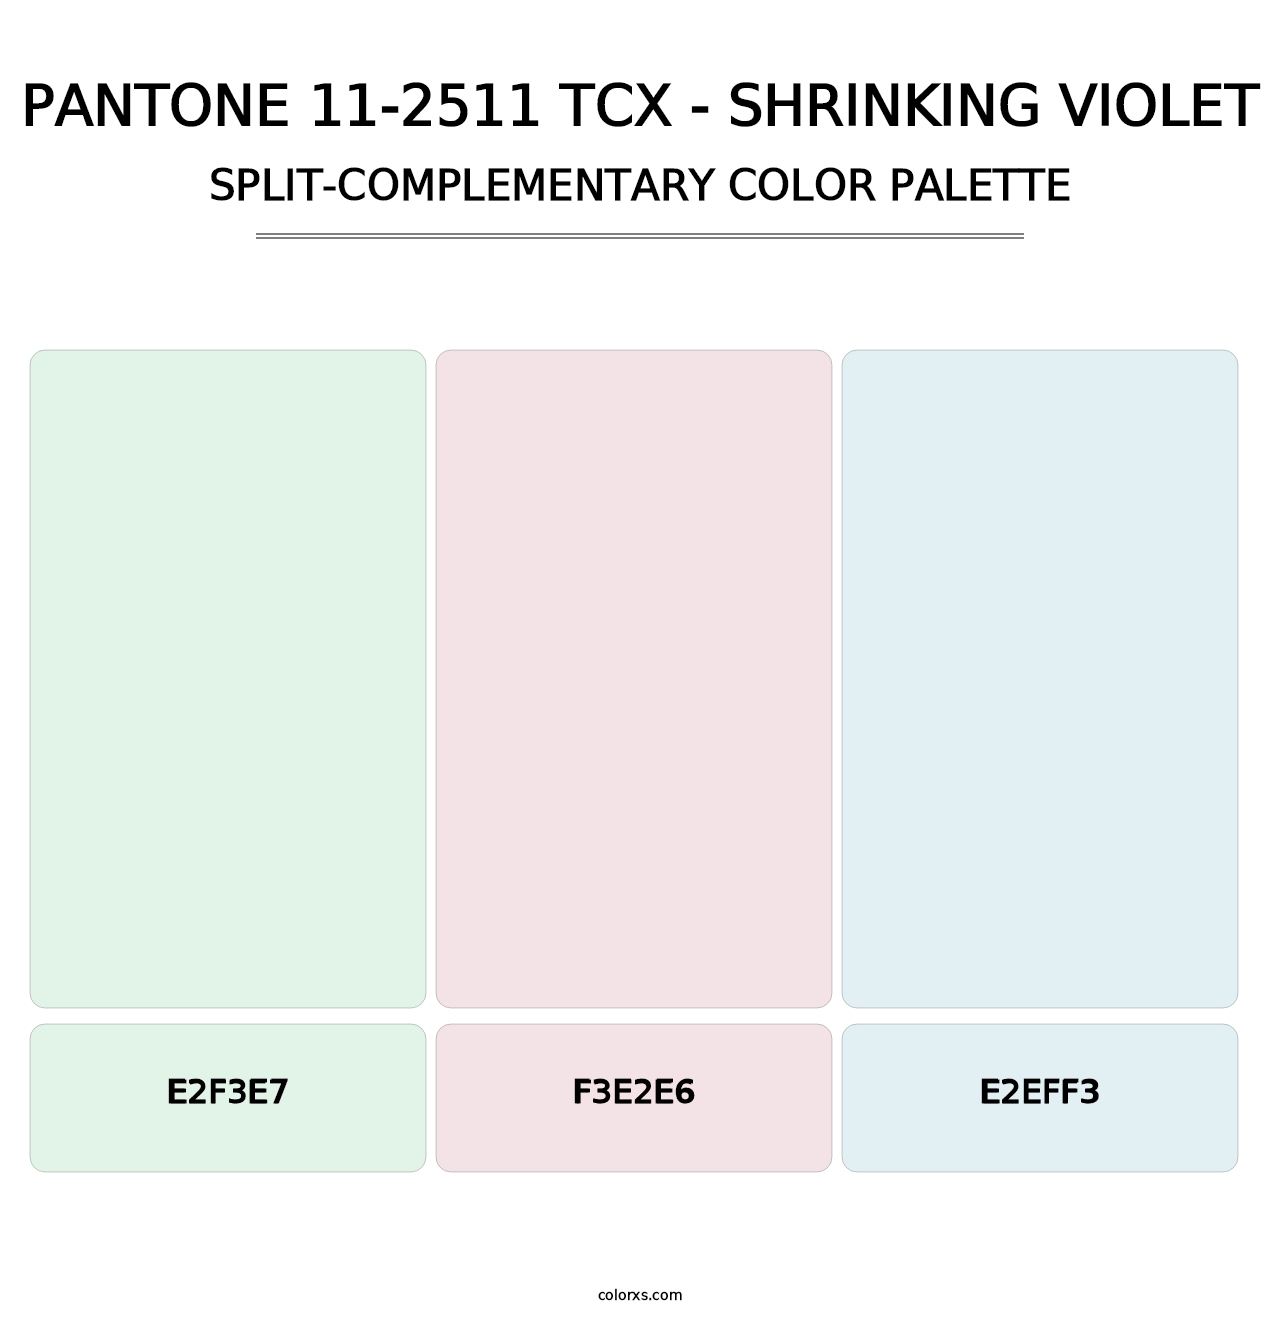 PANTONE 11-2511 TCX - Shrinking Violet - Split-Complementary Color Palette